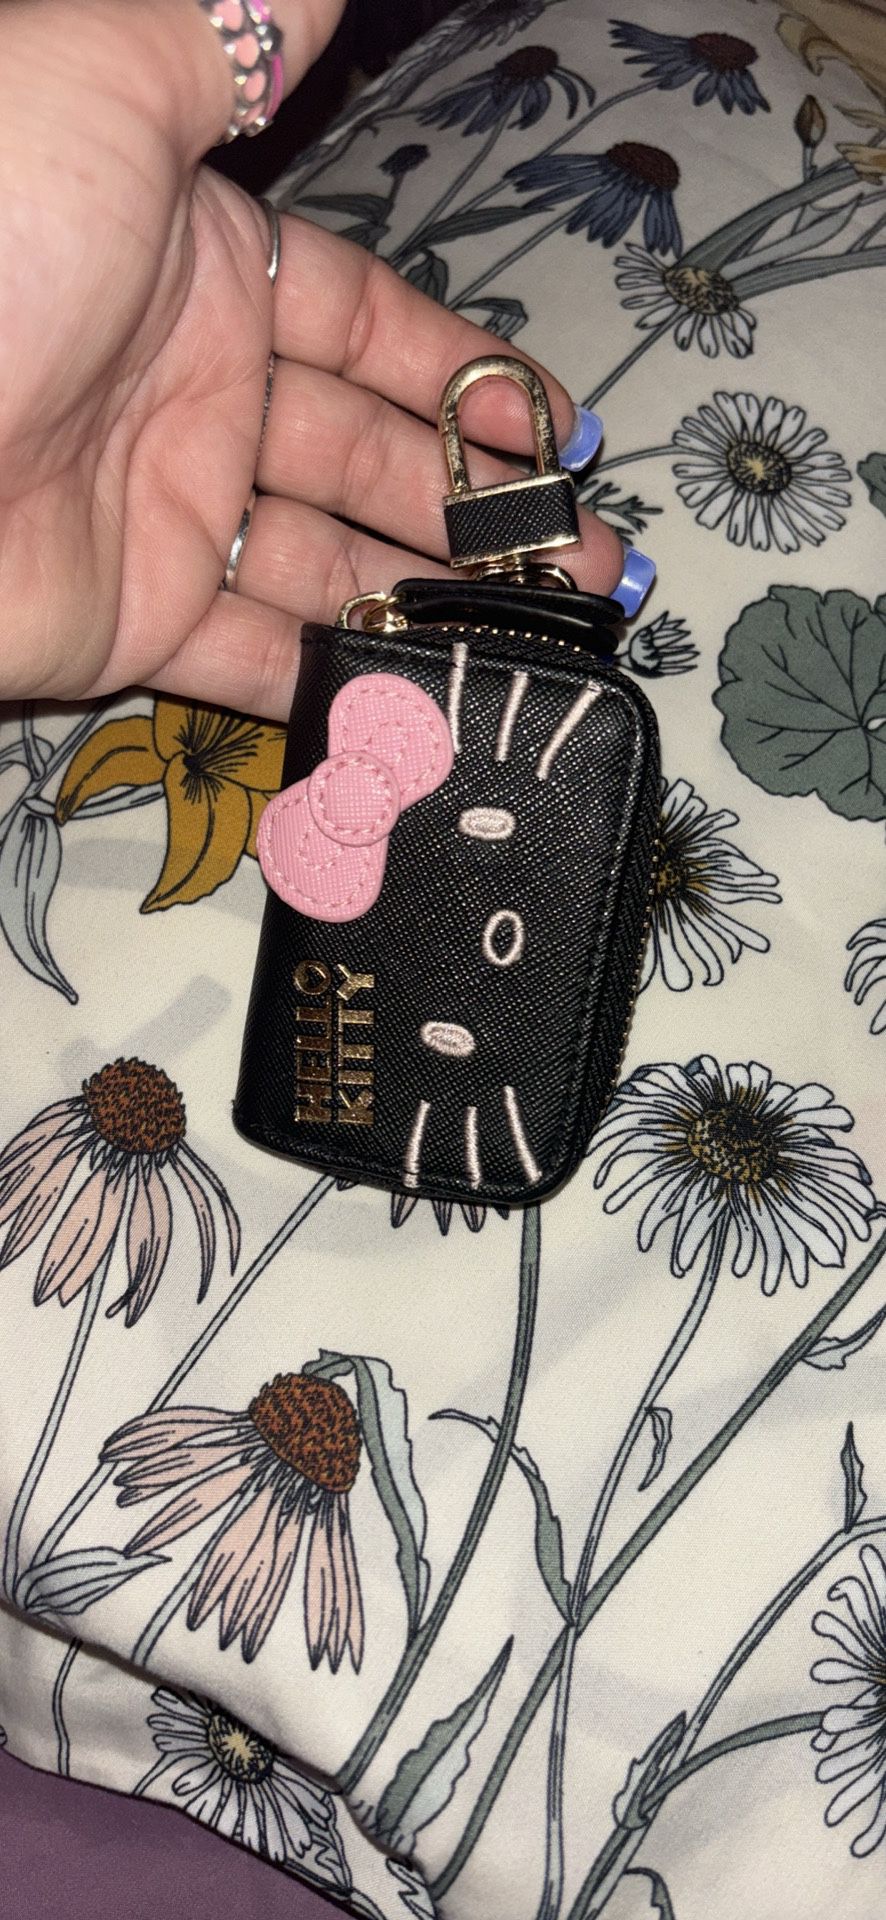 New Hello Kitty Keychain Firm On Price